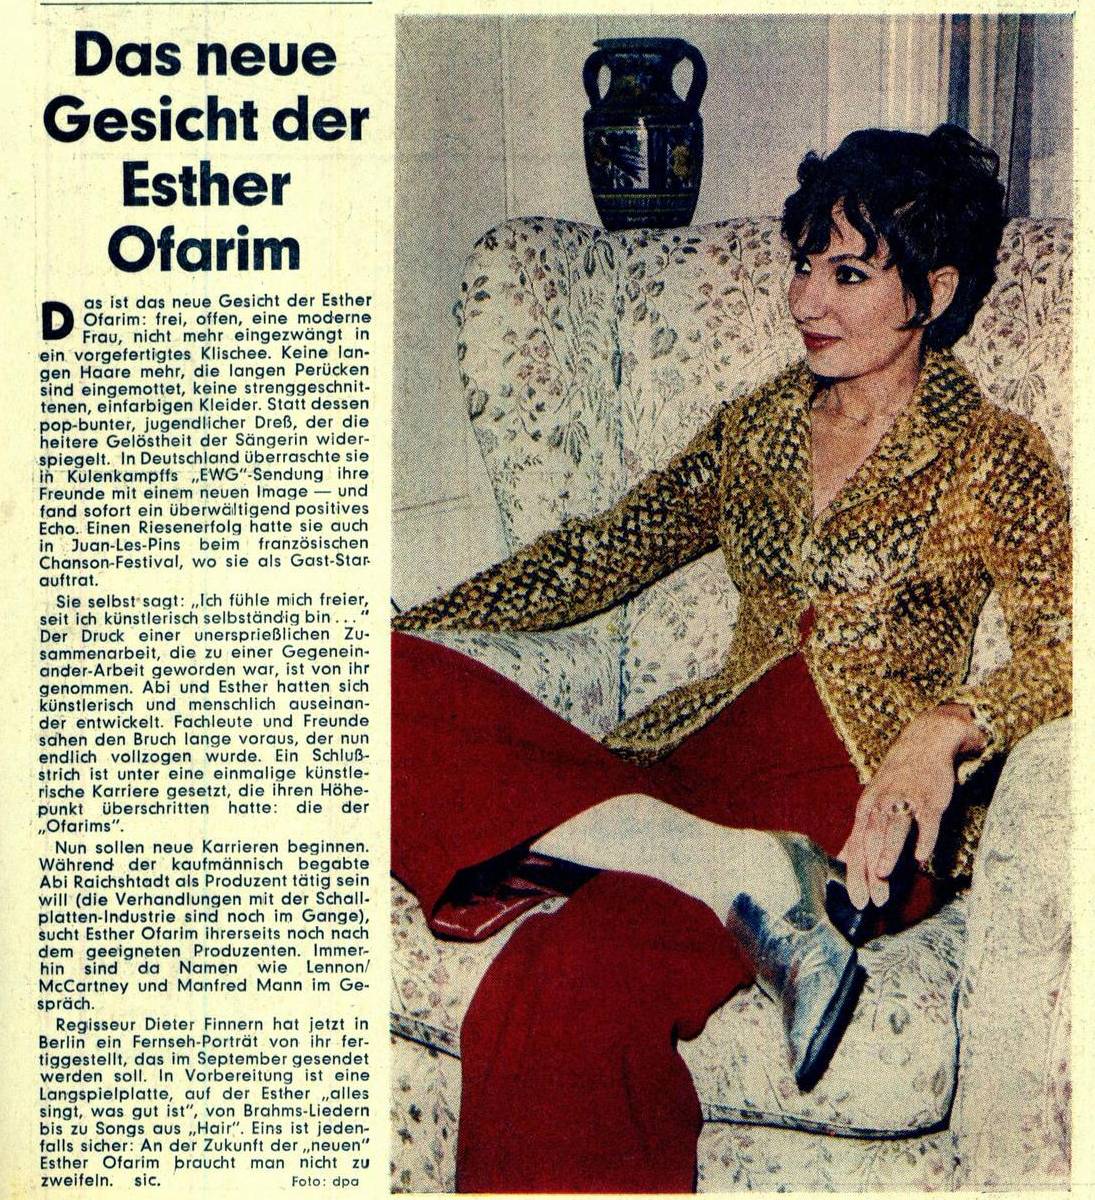 Esther Ofarim - article of the Hamburger Abendblatt, July 26+27, 1969